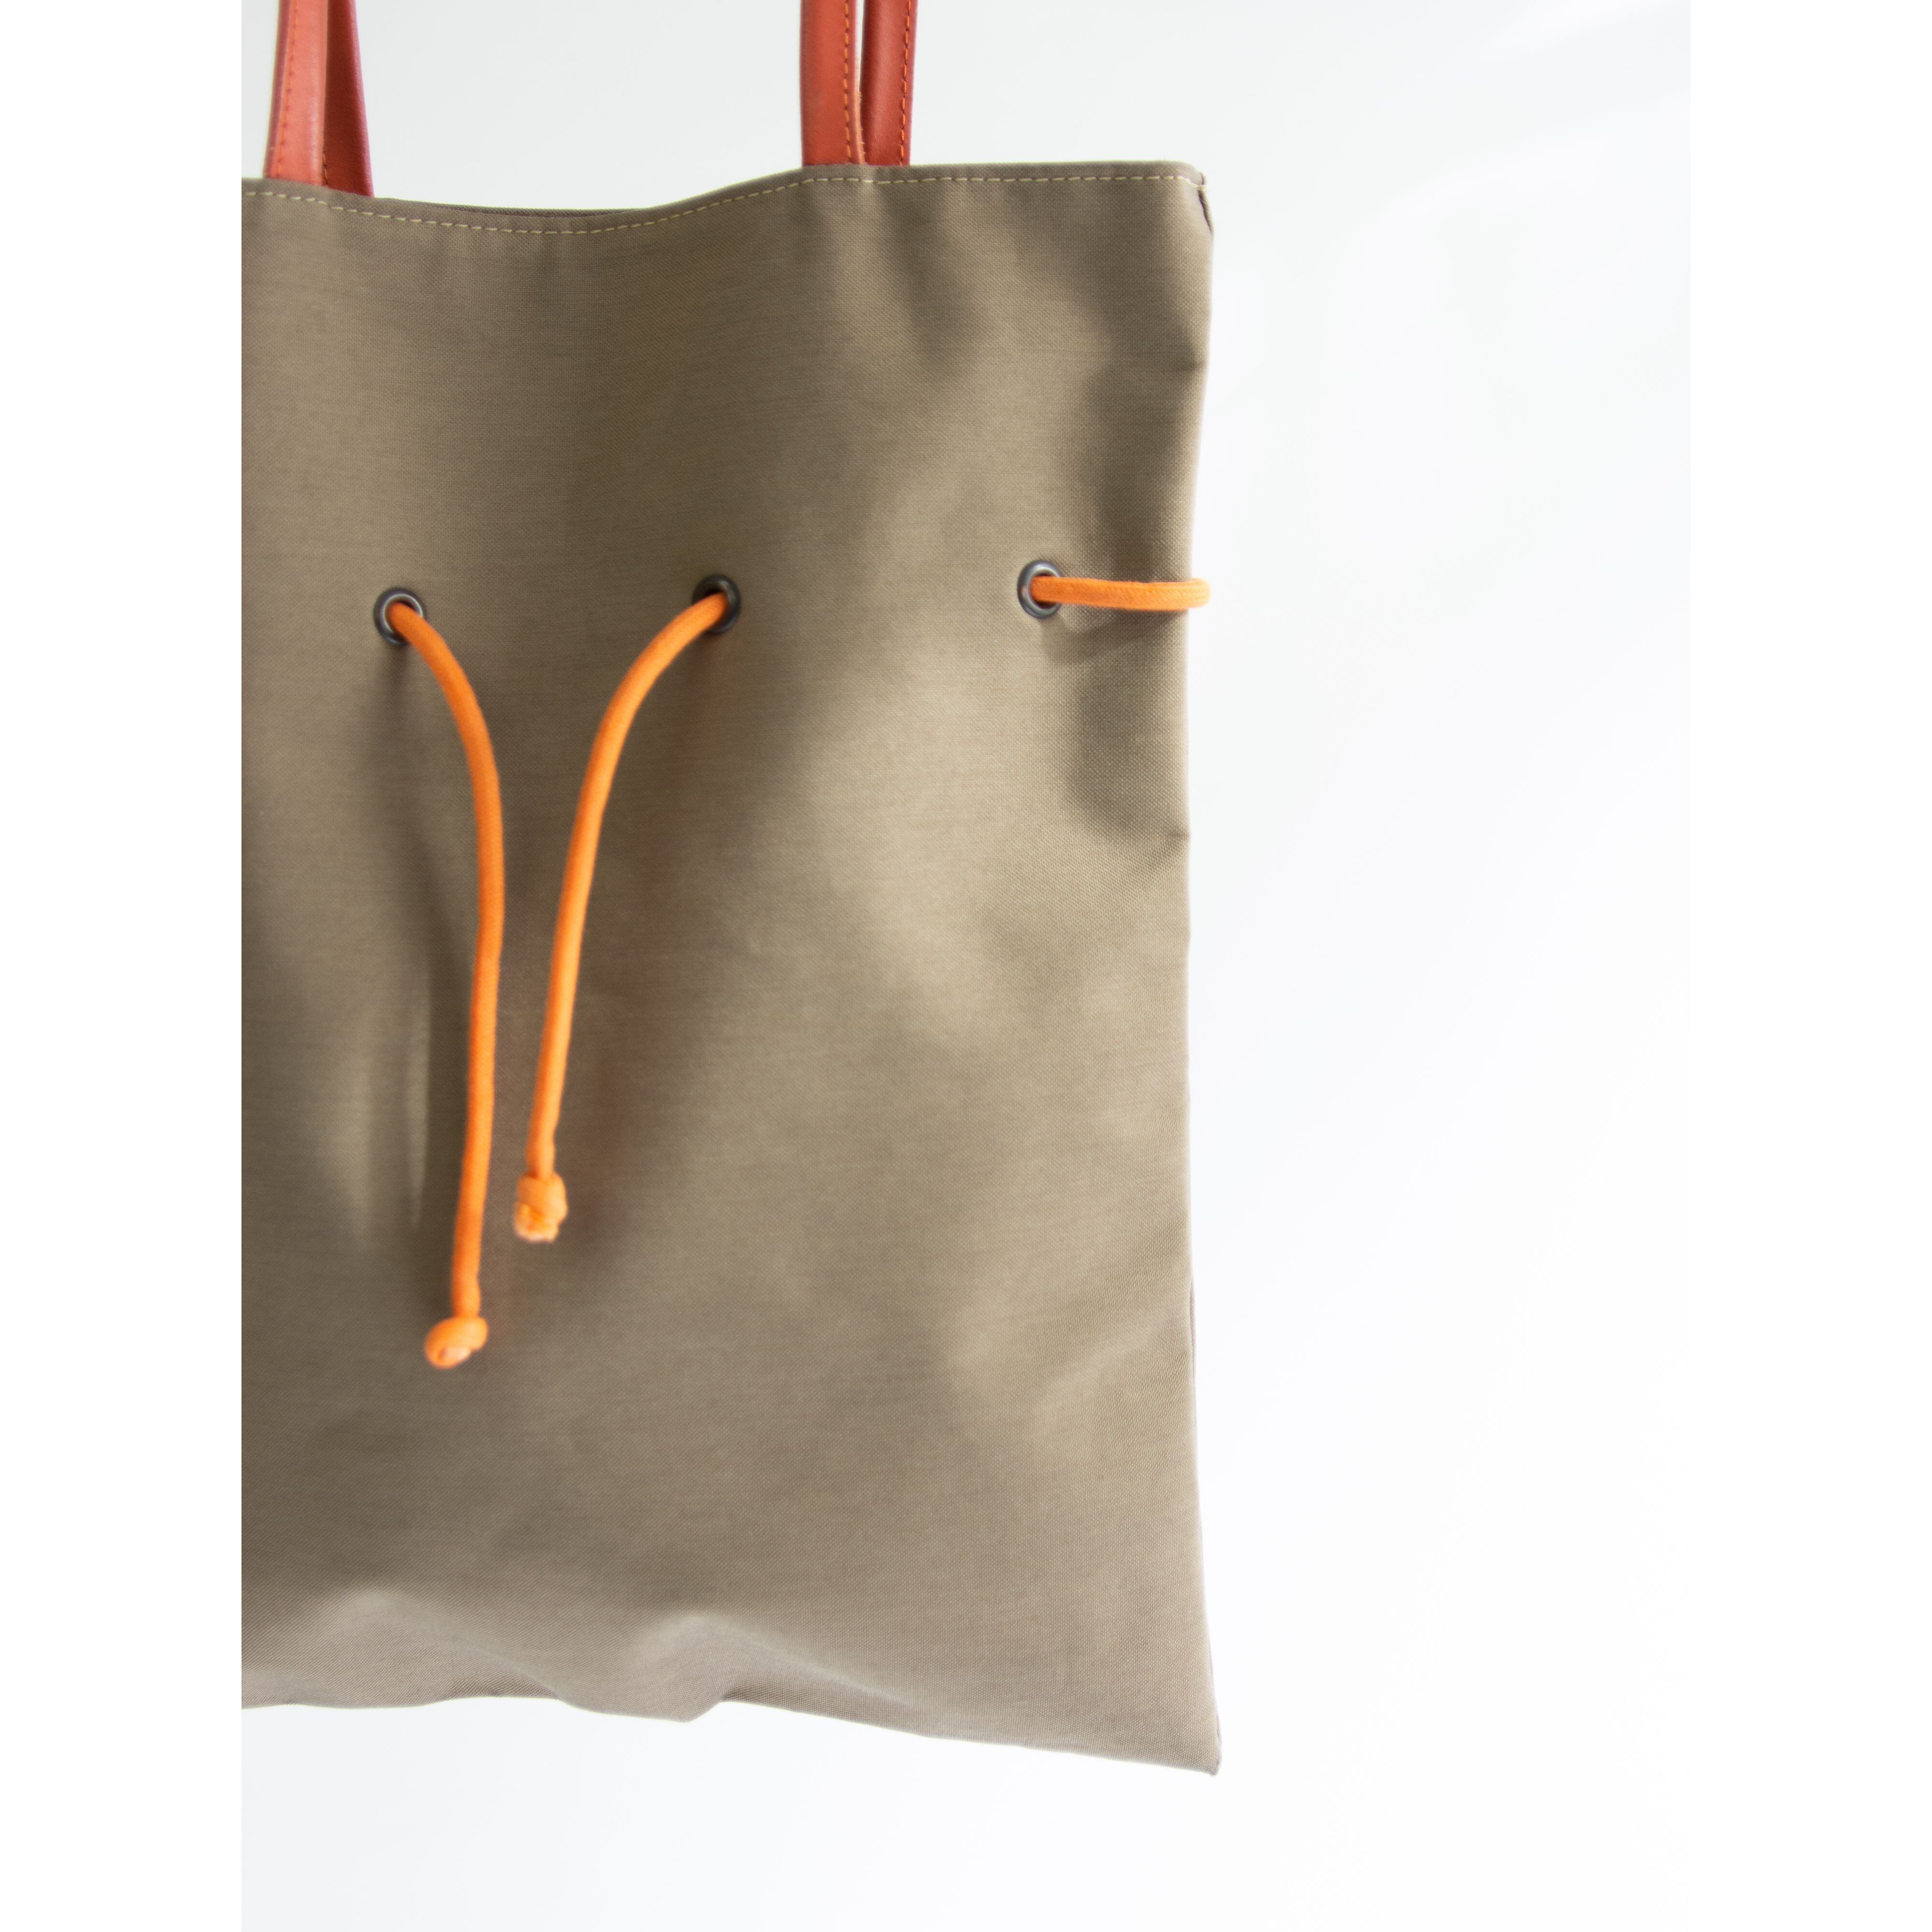 Sandrine LEONARD】Made in France leather handle nylon tote bag